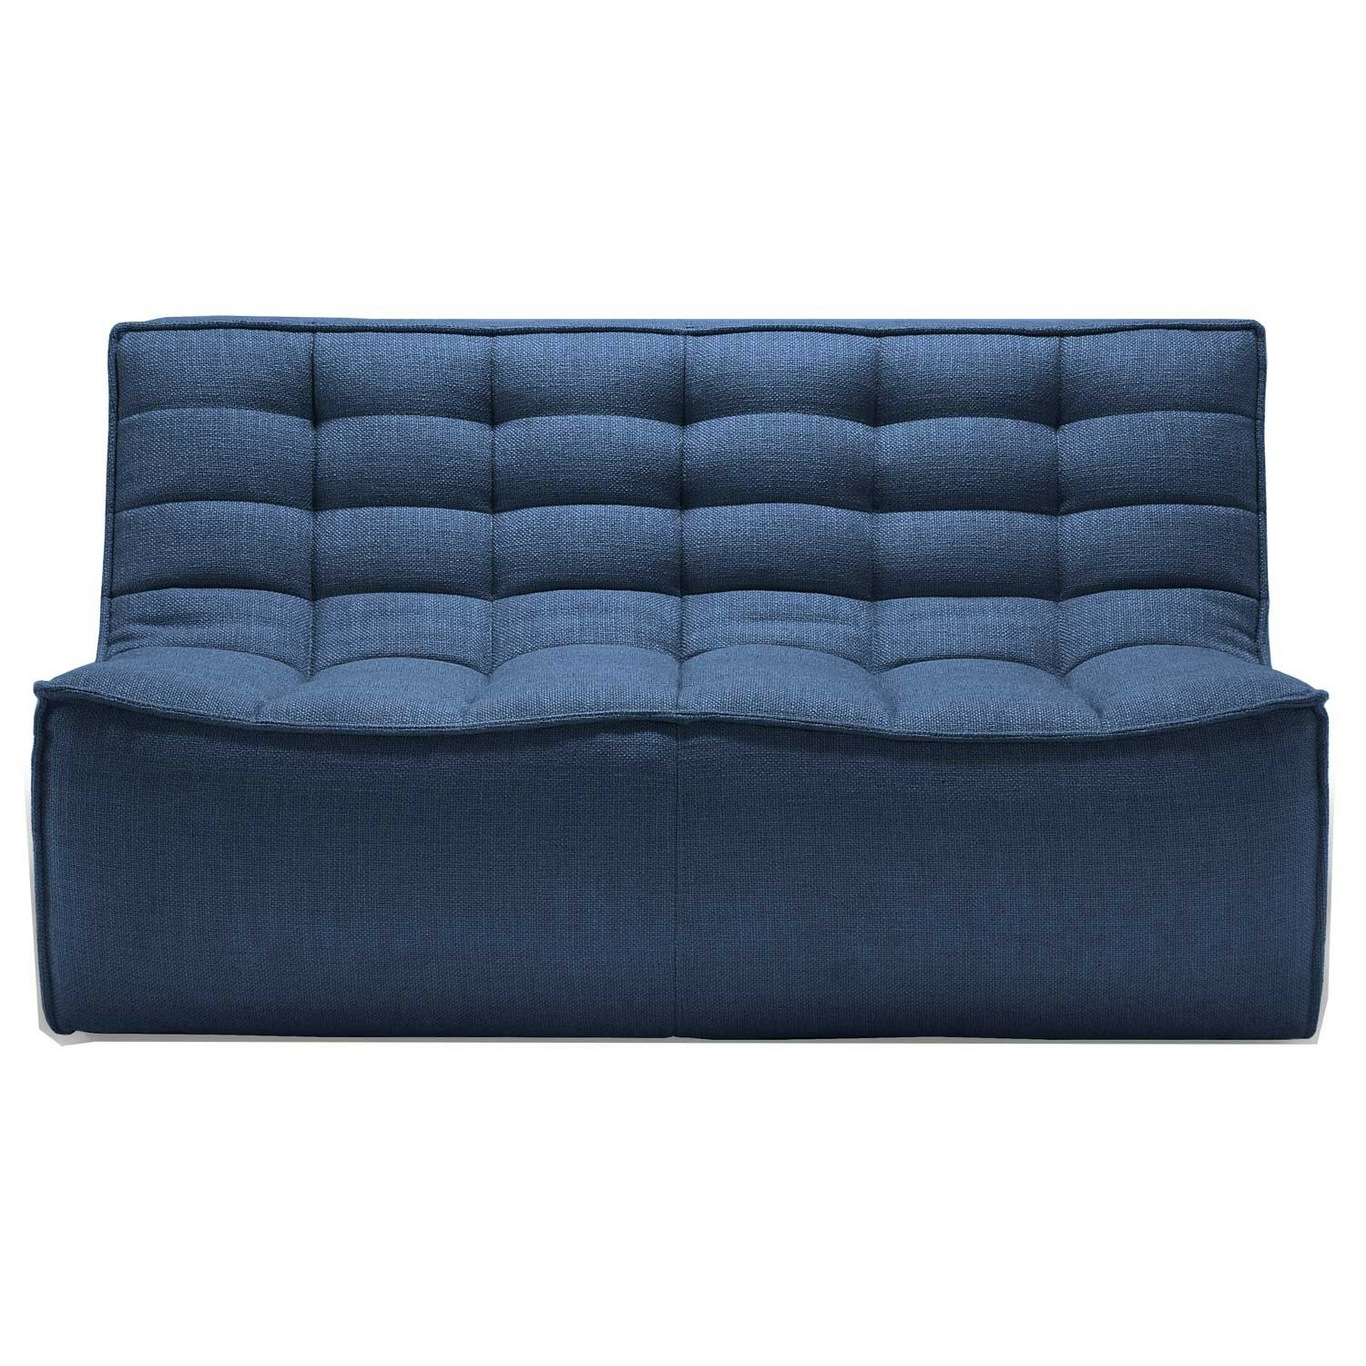 N701 Sofa, Blue 2-Seater